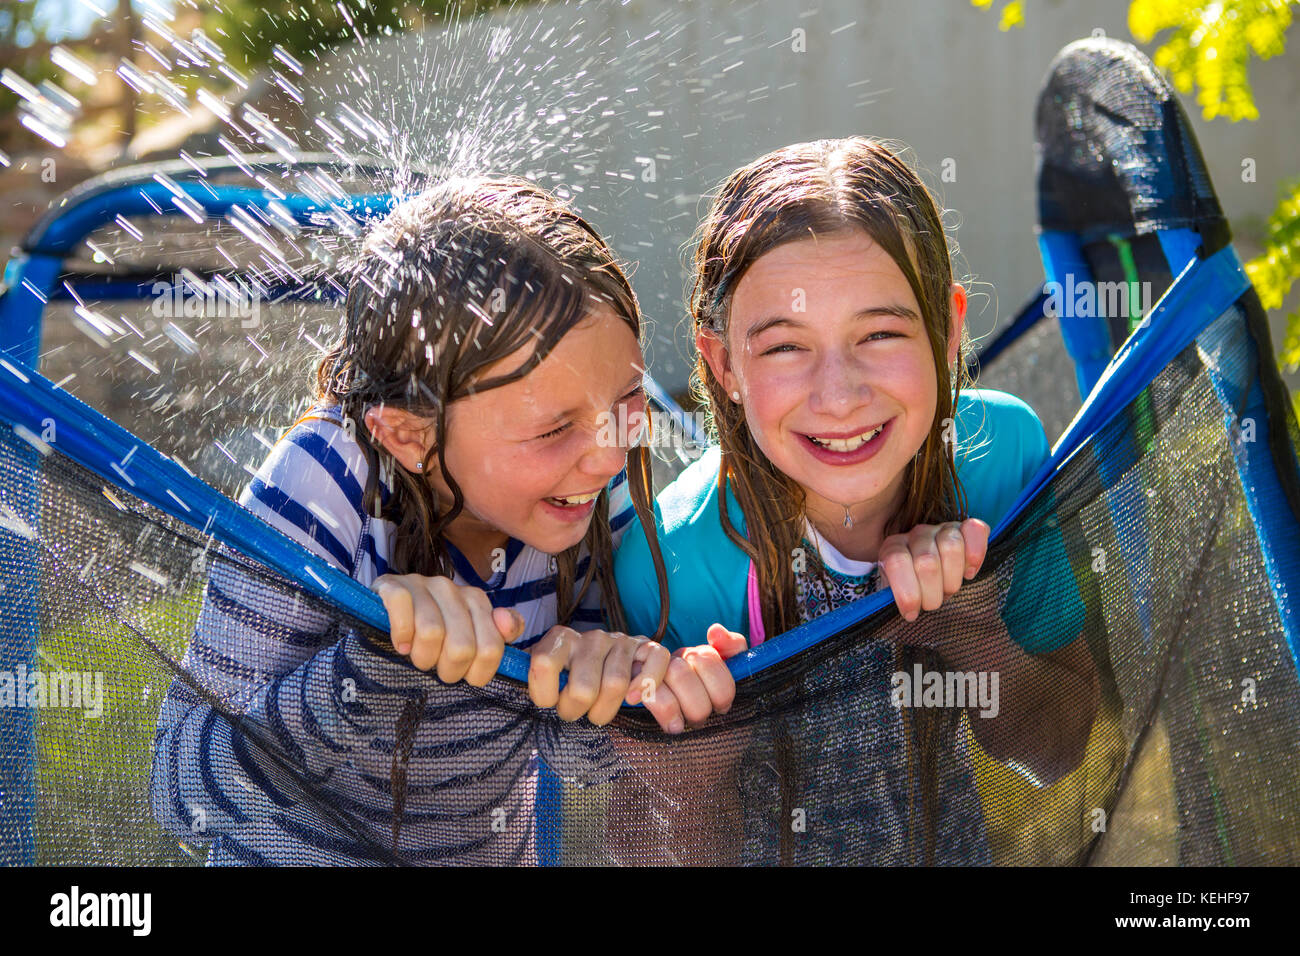 Water splashing on Caucasian girls leaning on netting Stock Photo